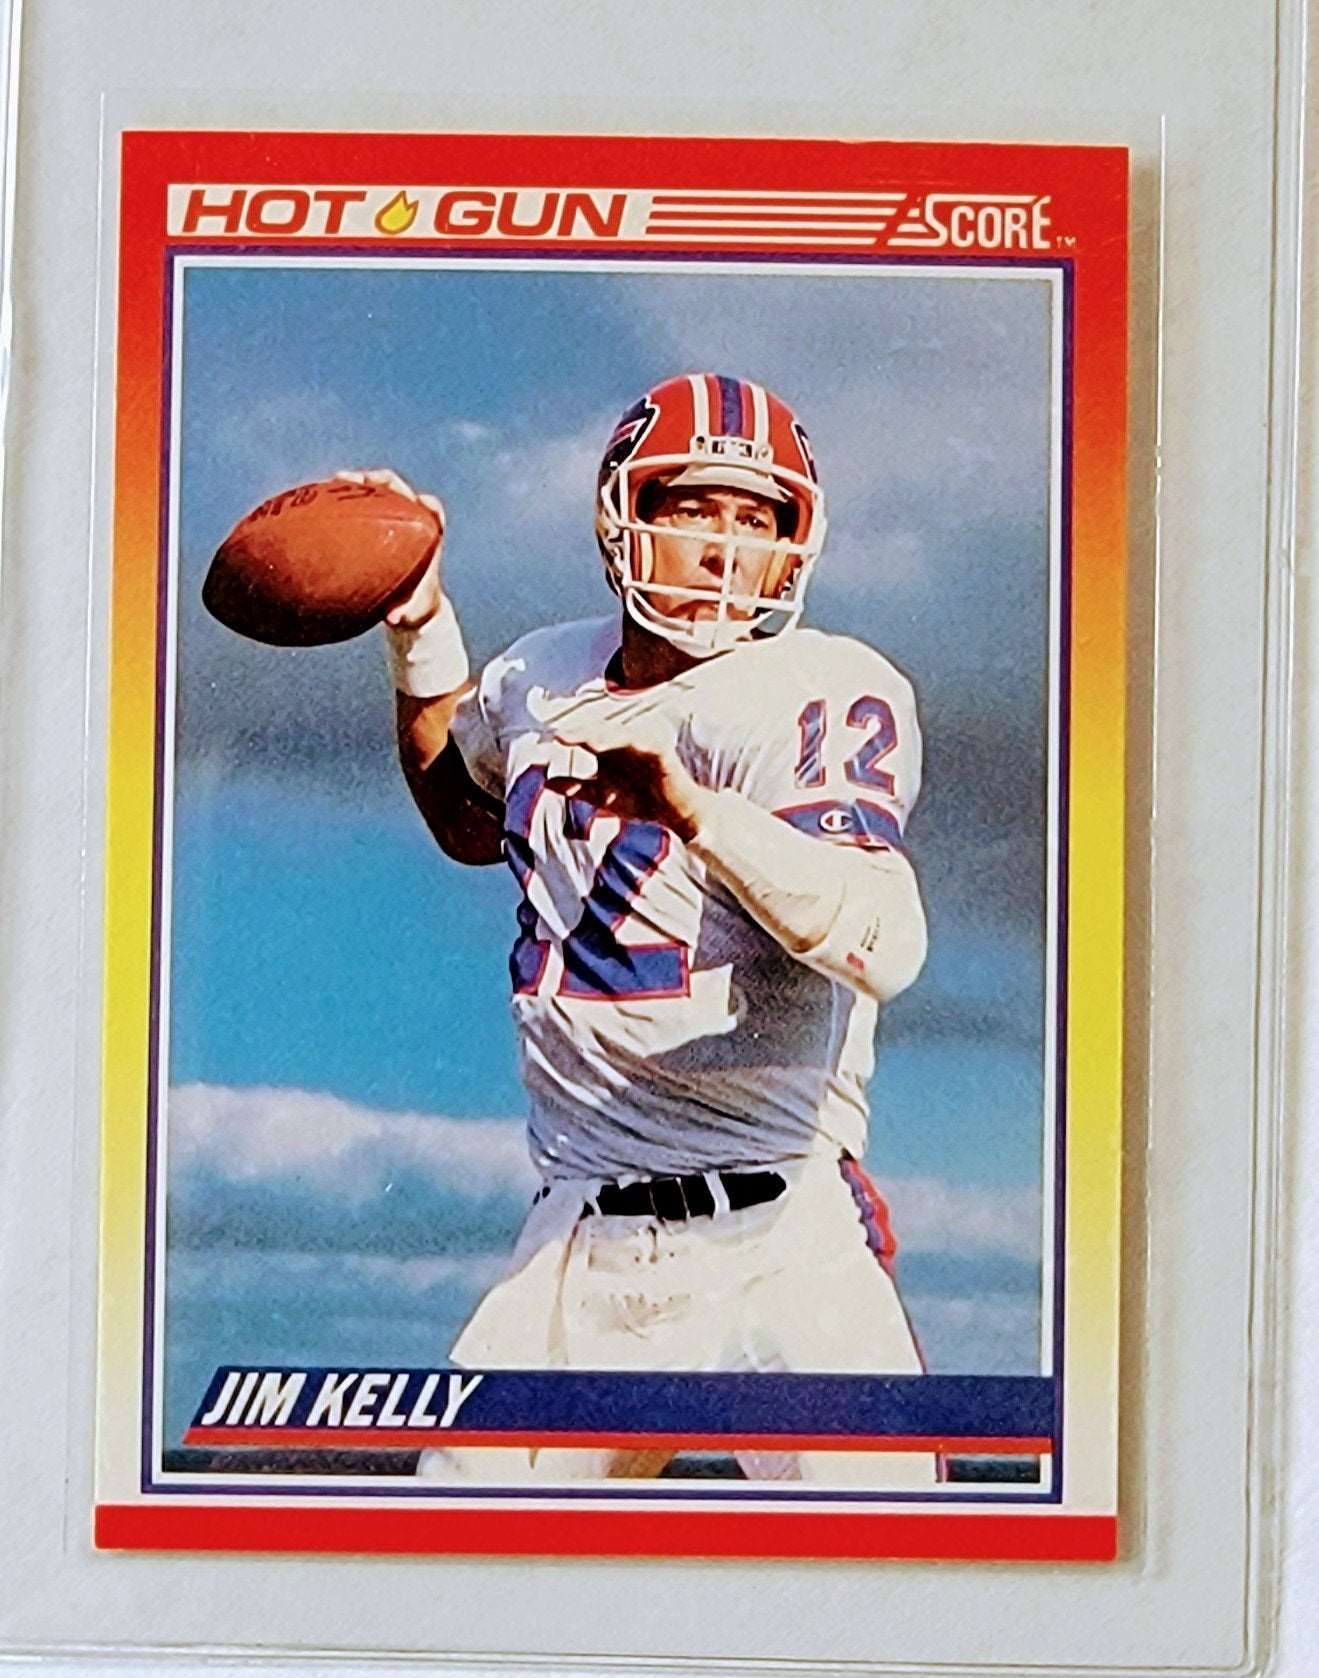 1990 Score Jim Kelly Hot Gun Insert Football Card AVM1 simple Xclusive Collectibles   